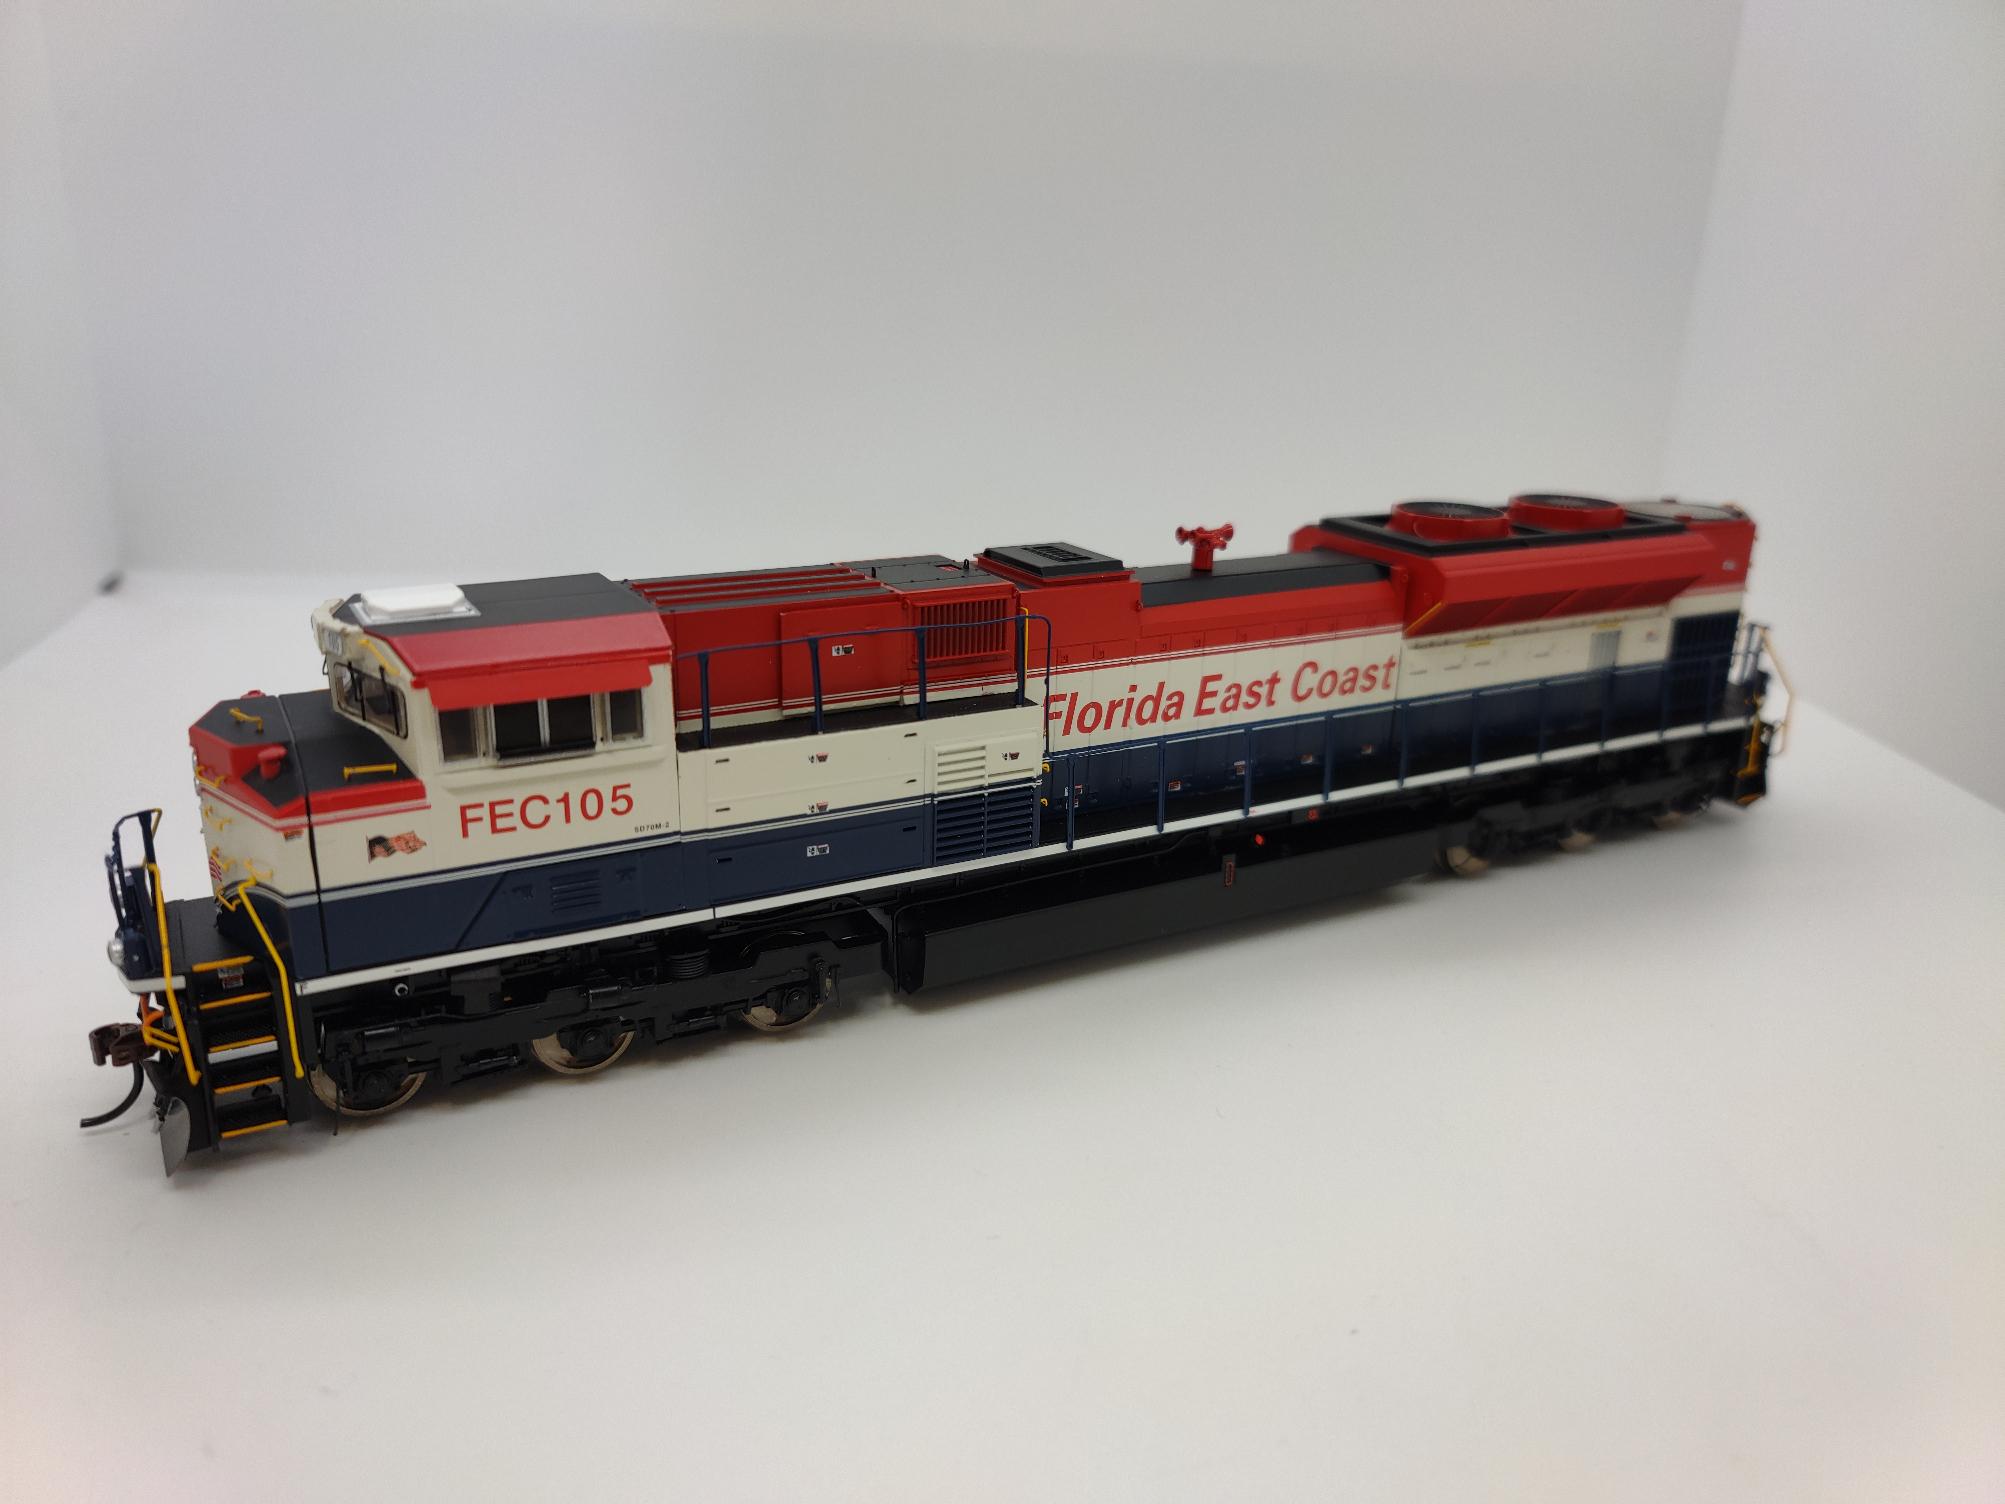 N Scale - Life-Like - 7484-A - Locomotive, Diesel, Fairbanks Mors